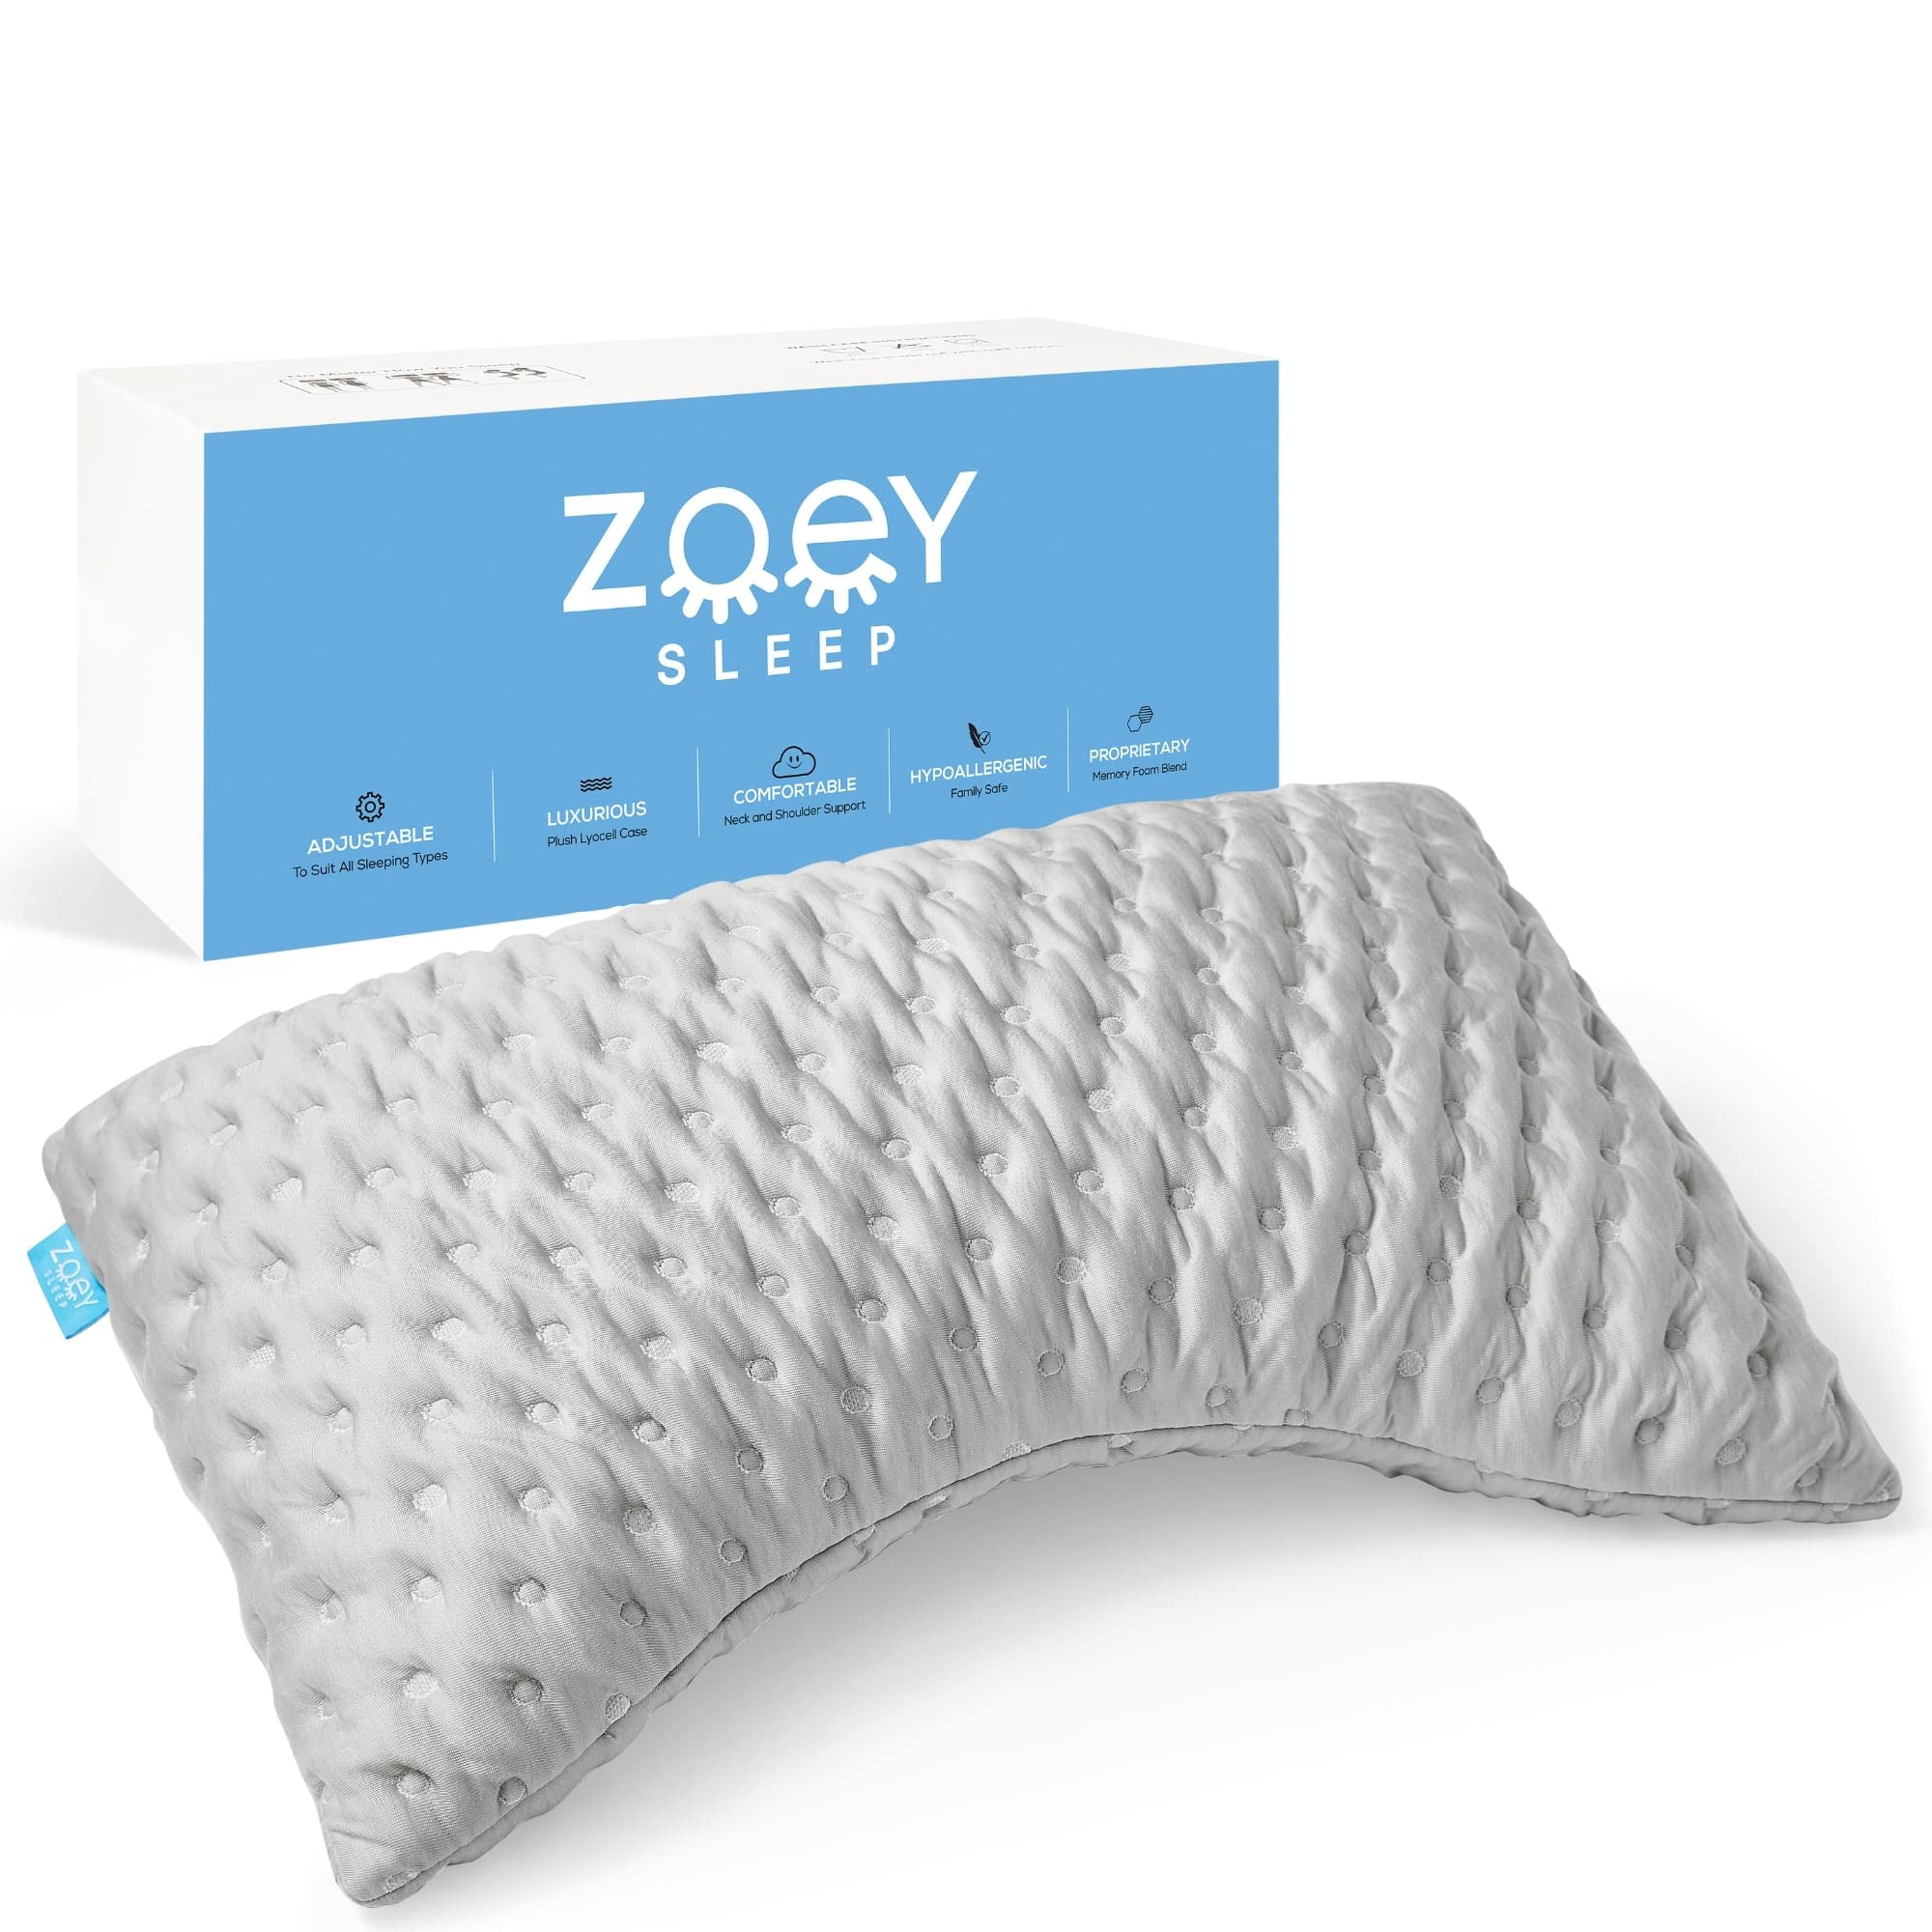  Zoey Sleep وسادة نوم جانبية - وسائد سرير من الإسفنج الذاكرة للنوم - دور علوي داعم قابل للتعديل بنسبة 100٪ - يساعد على...